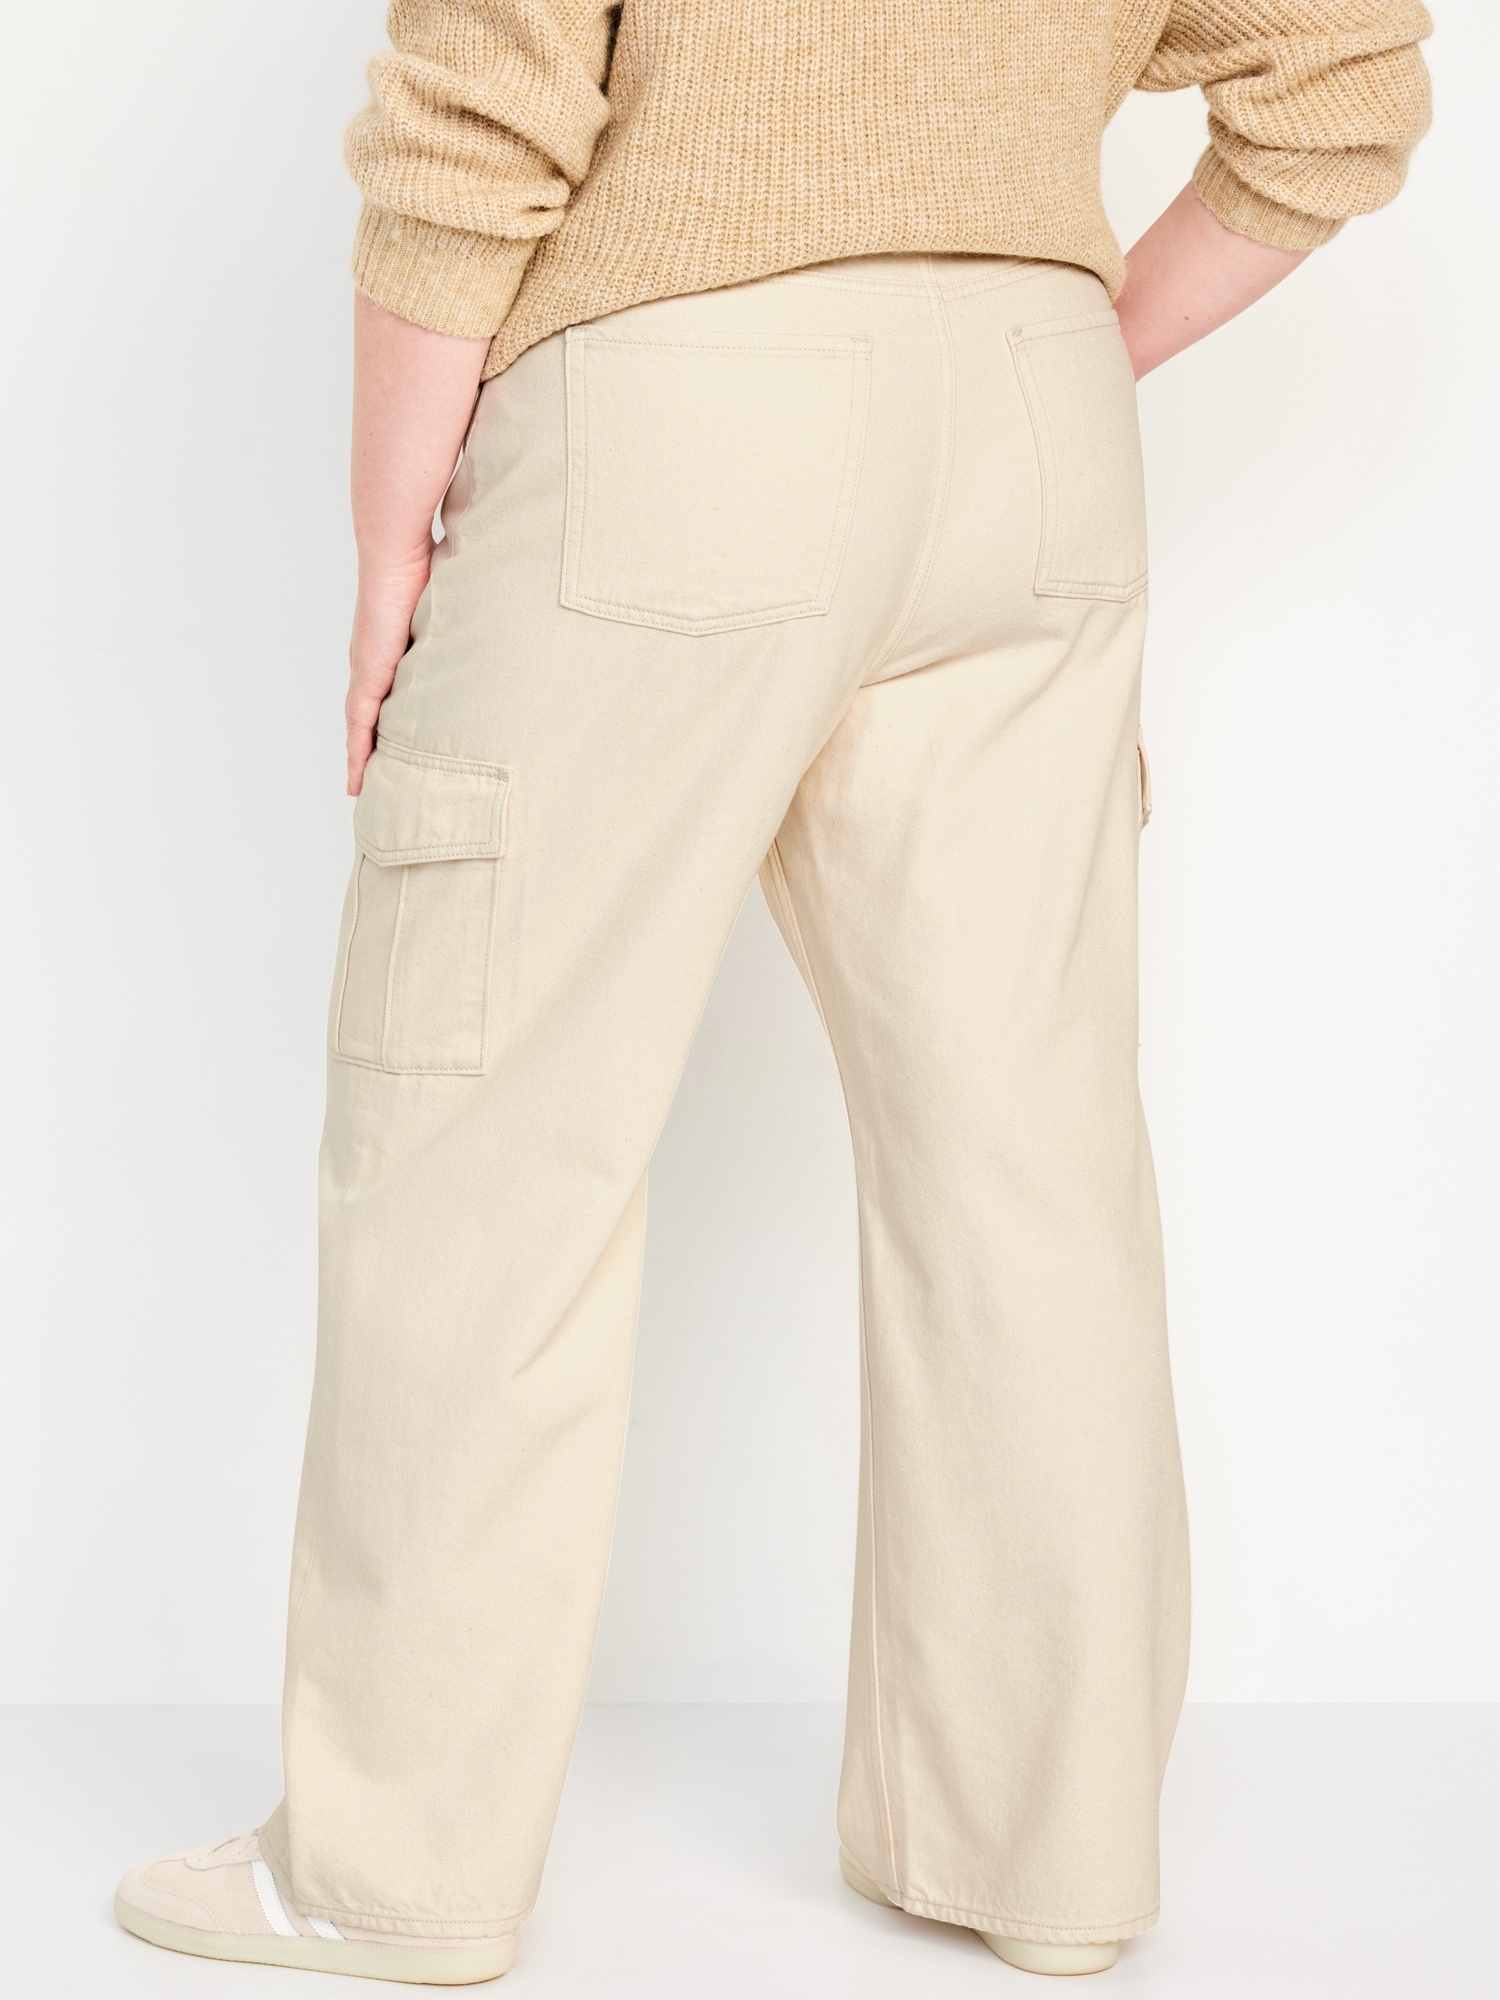 Womens GAP Jeans Tan Cotton Cargo Capri Pants with Back Flap Pockets Size 4